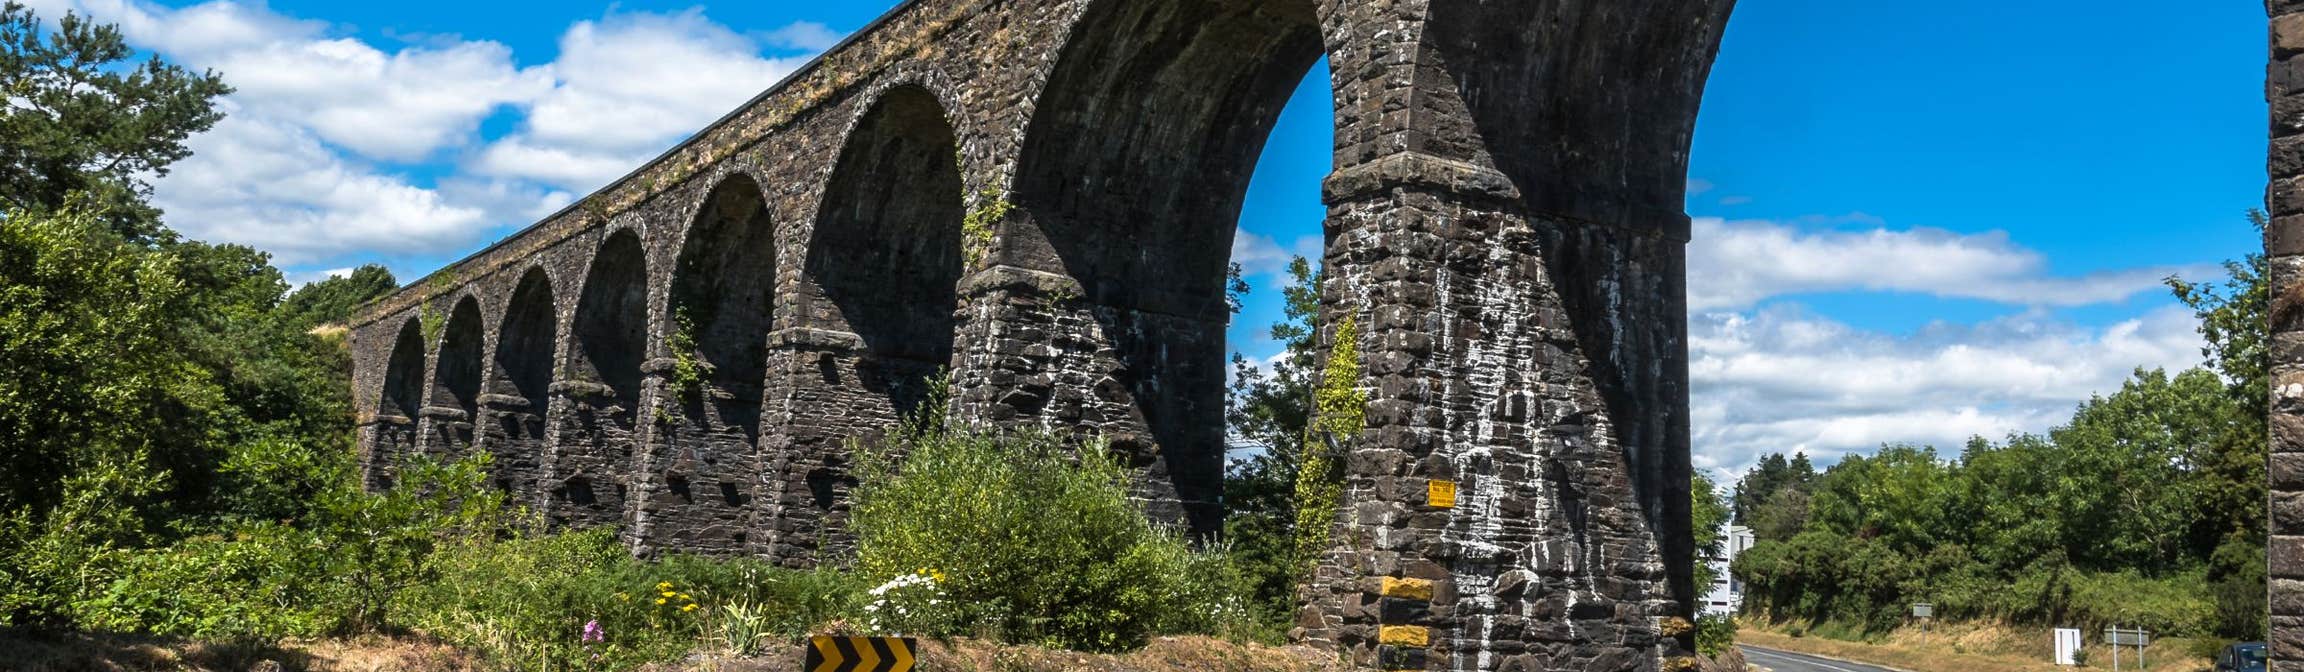 Image of the bridge in Kilmacthomas in County Waterford